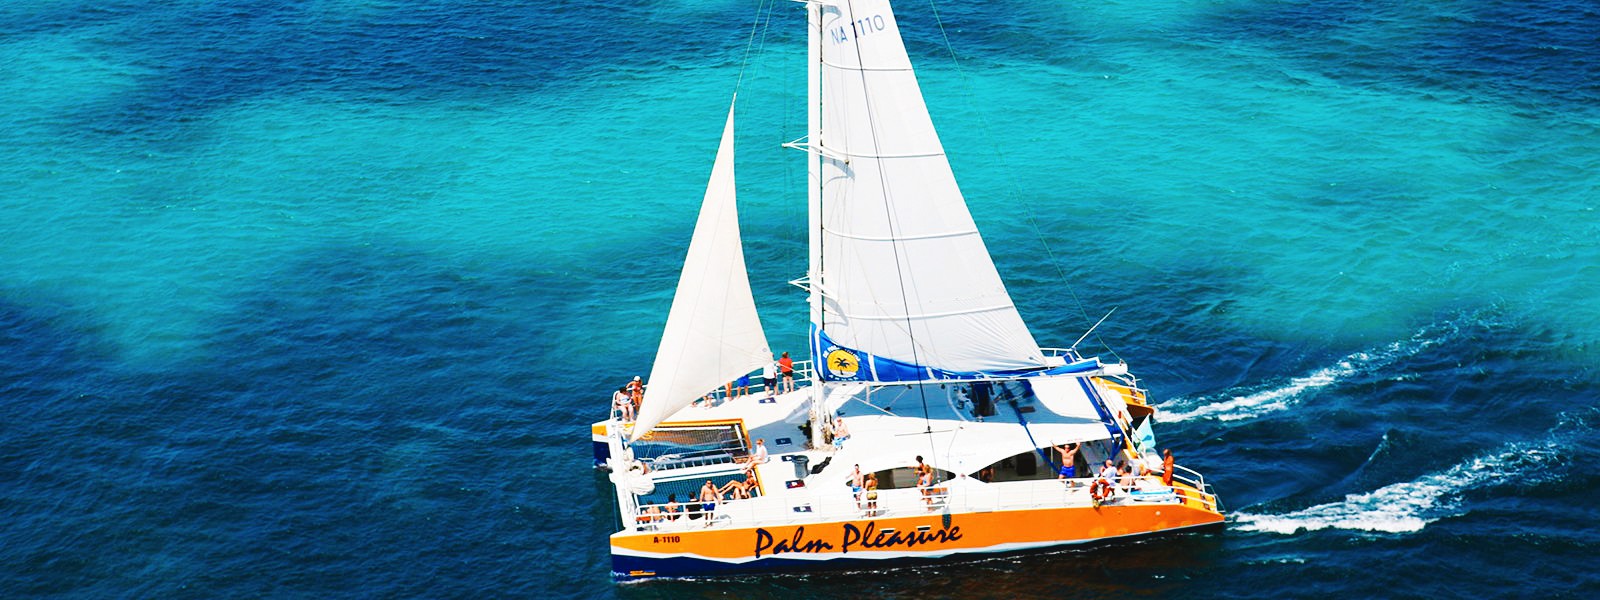 8 Fun Experiences You Need To Have In The Caribbean Island Of Aruba (4)